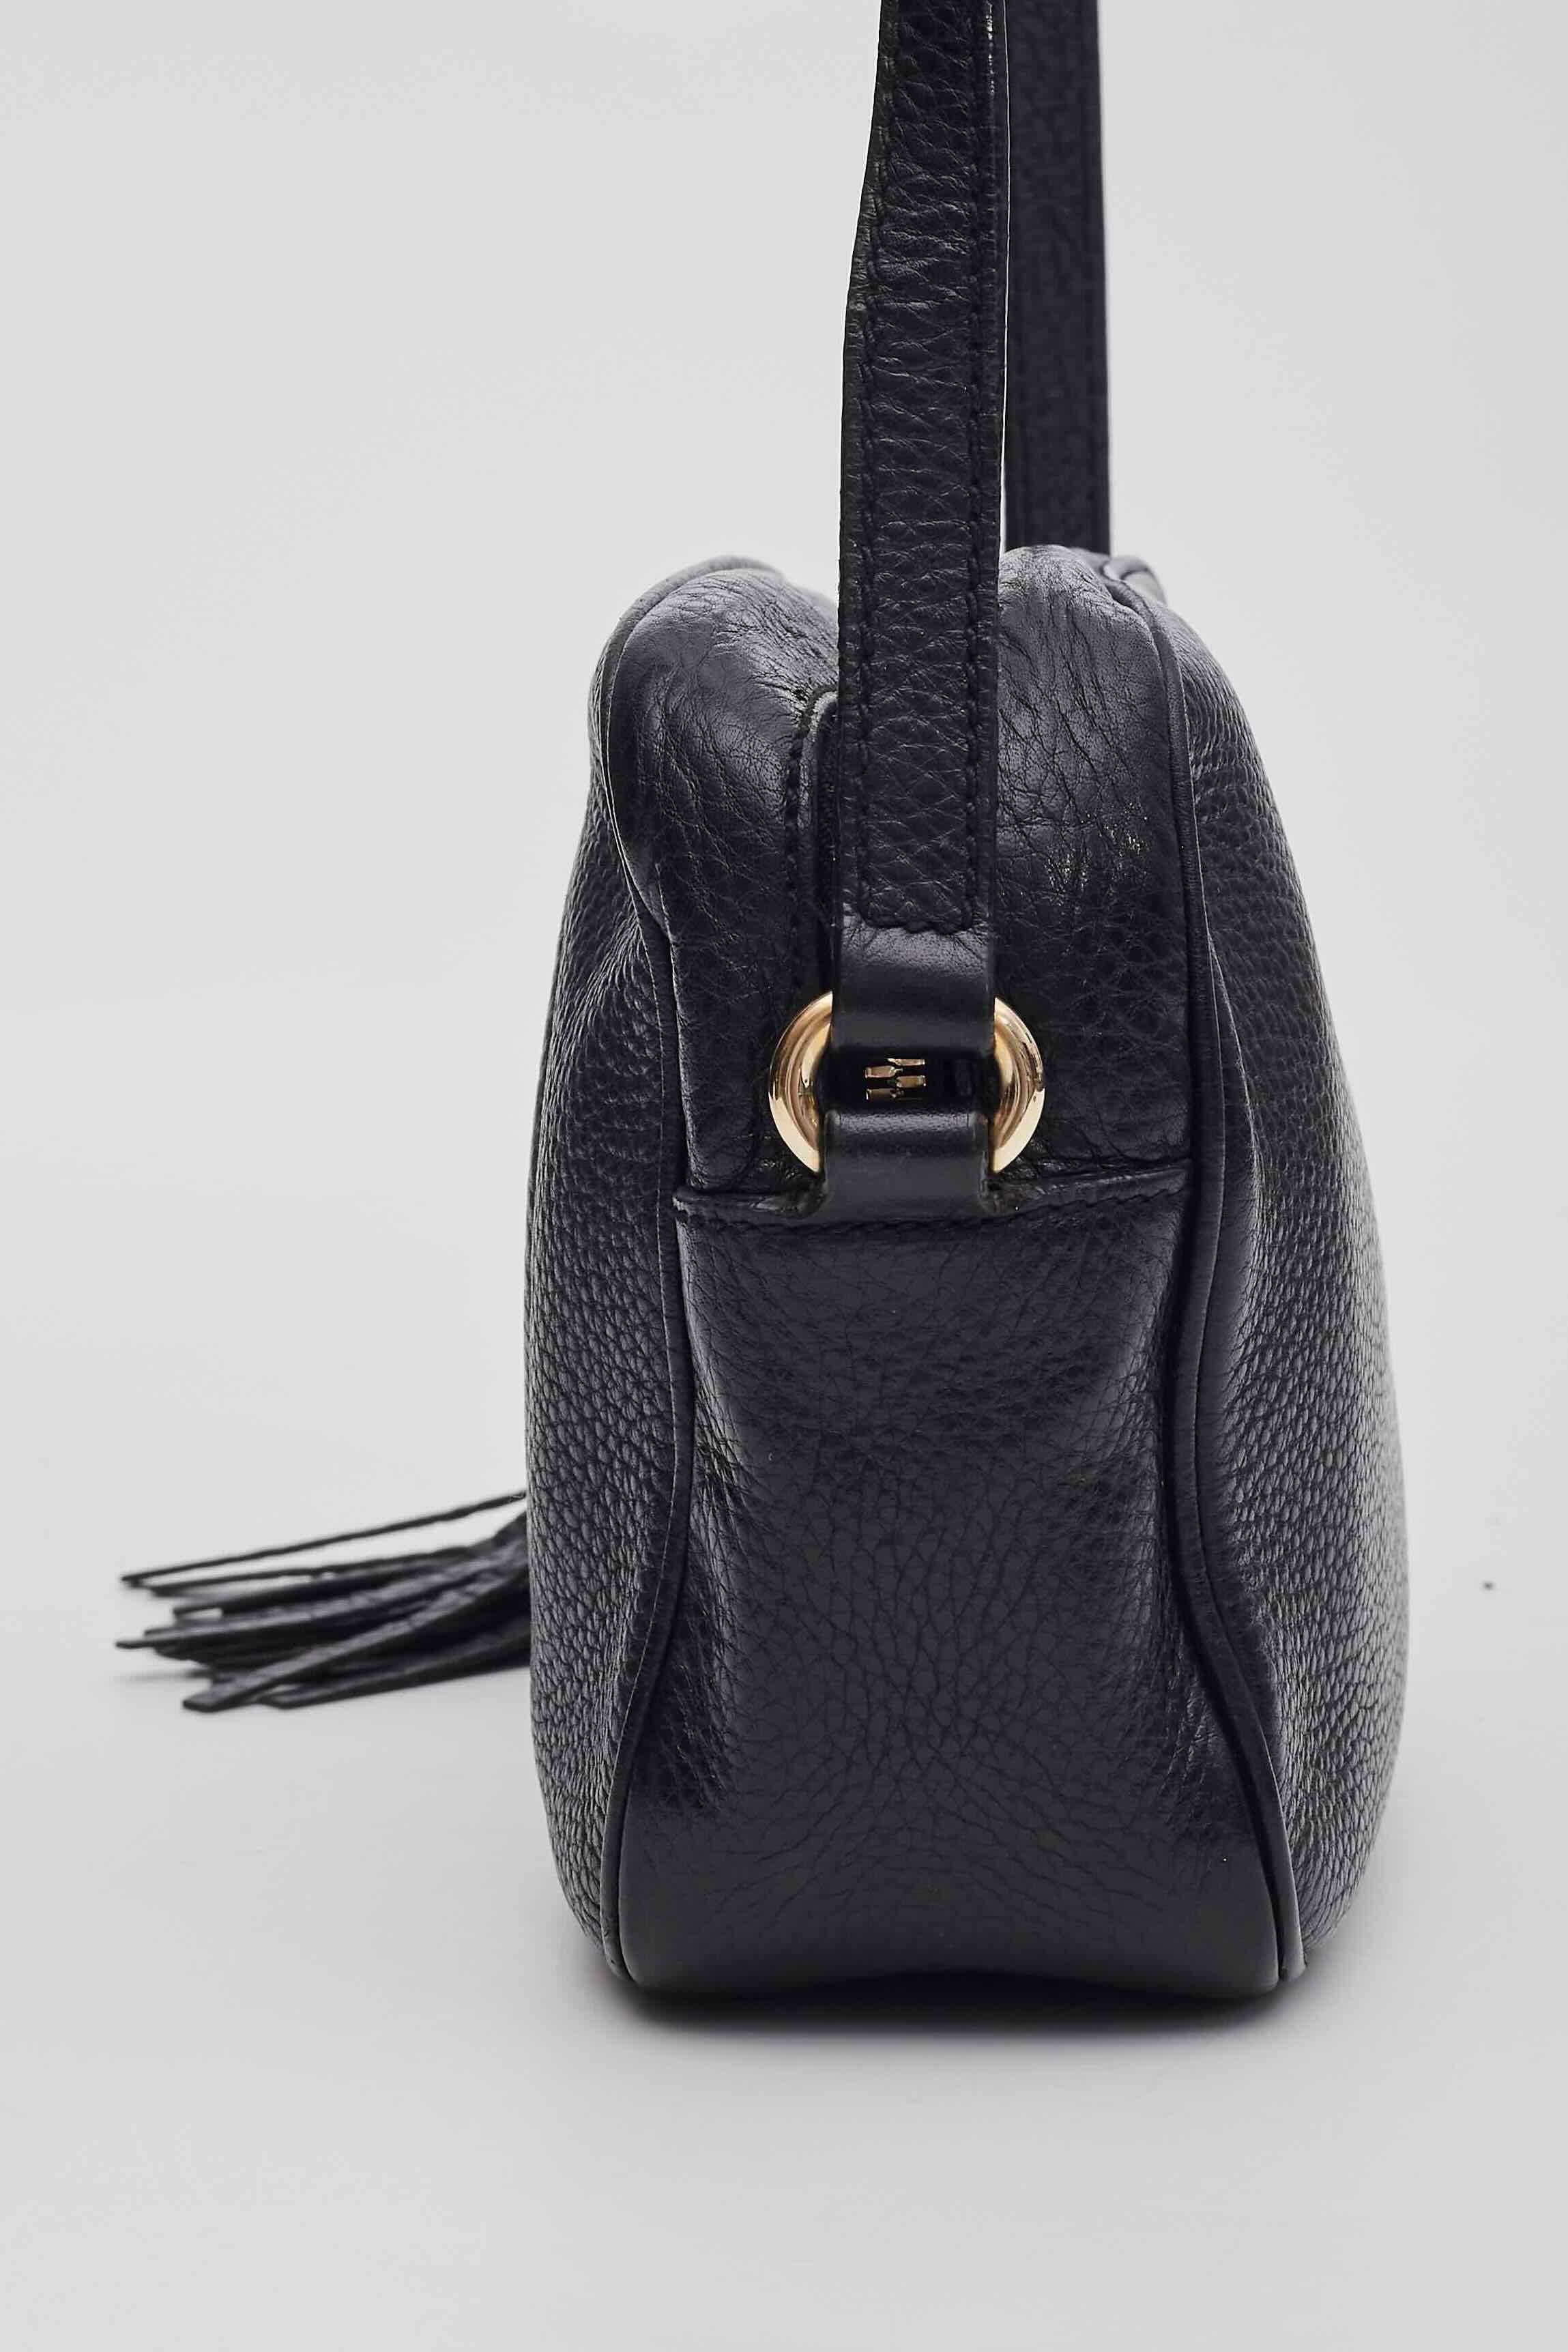 Women's Gucci Soho Disco Black Leather Shoulder Bag For Sale